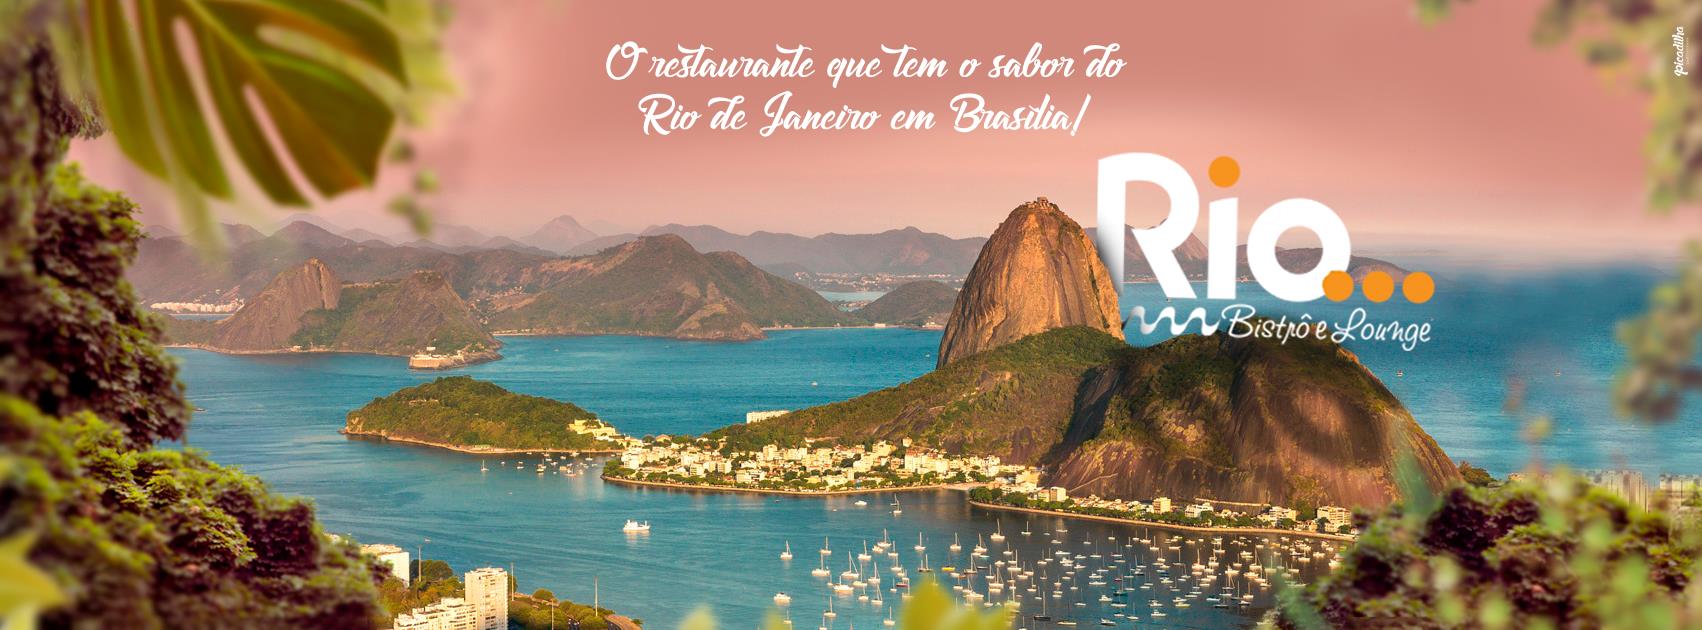 Rio Bistrô e Lounge slide 0